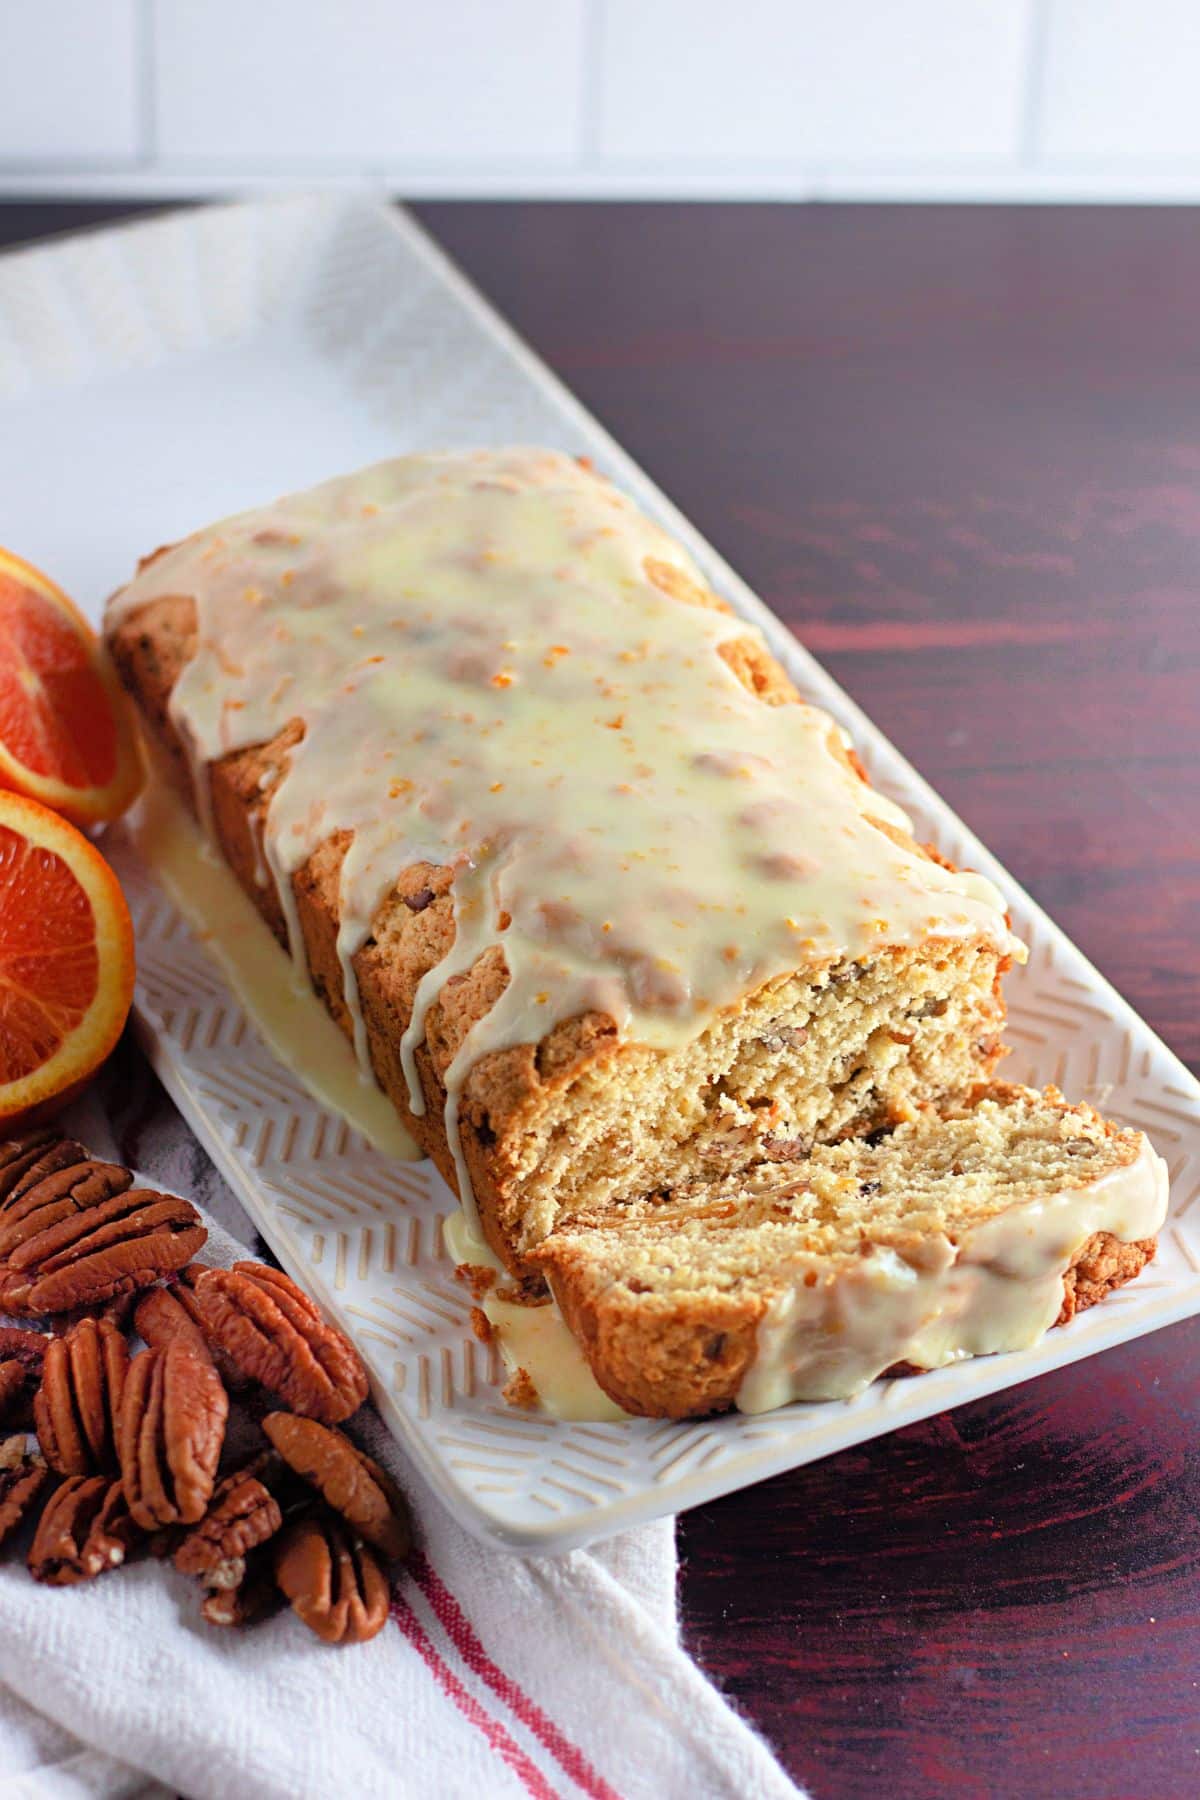 Glazed orange bread on a white platter next to cut oranges.